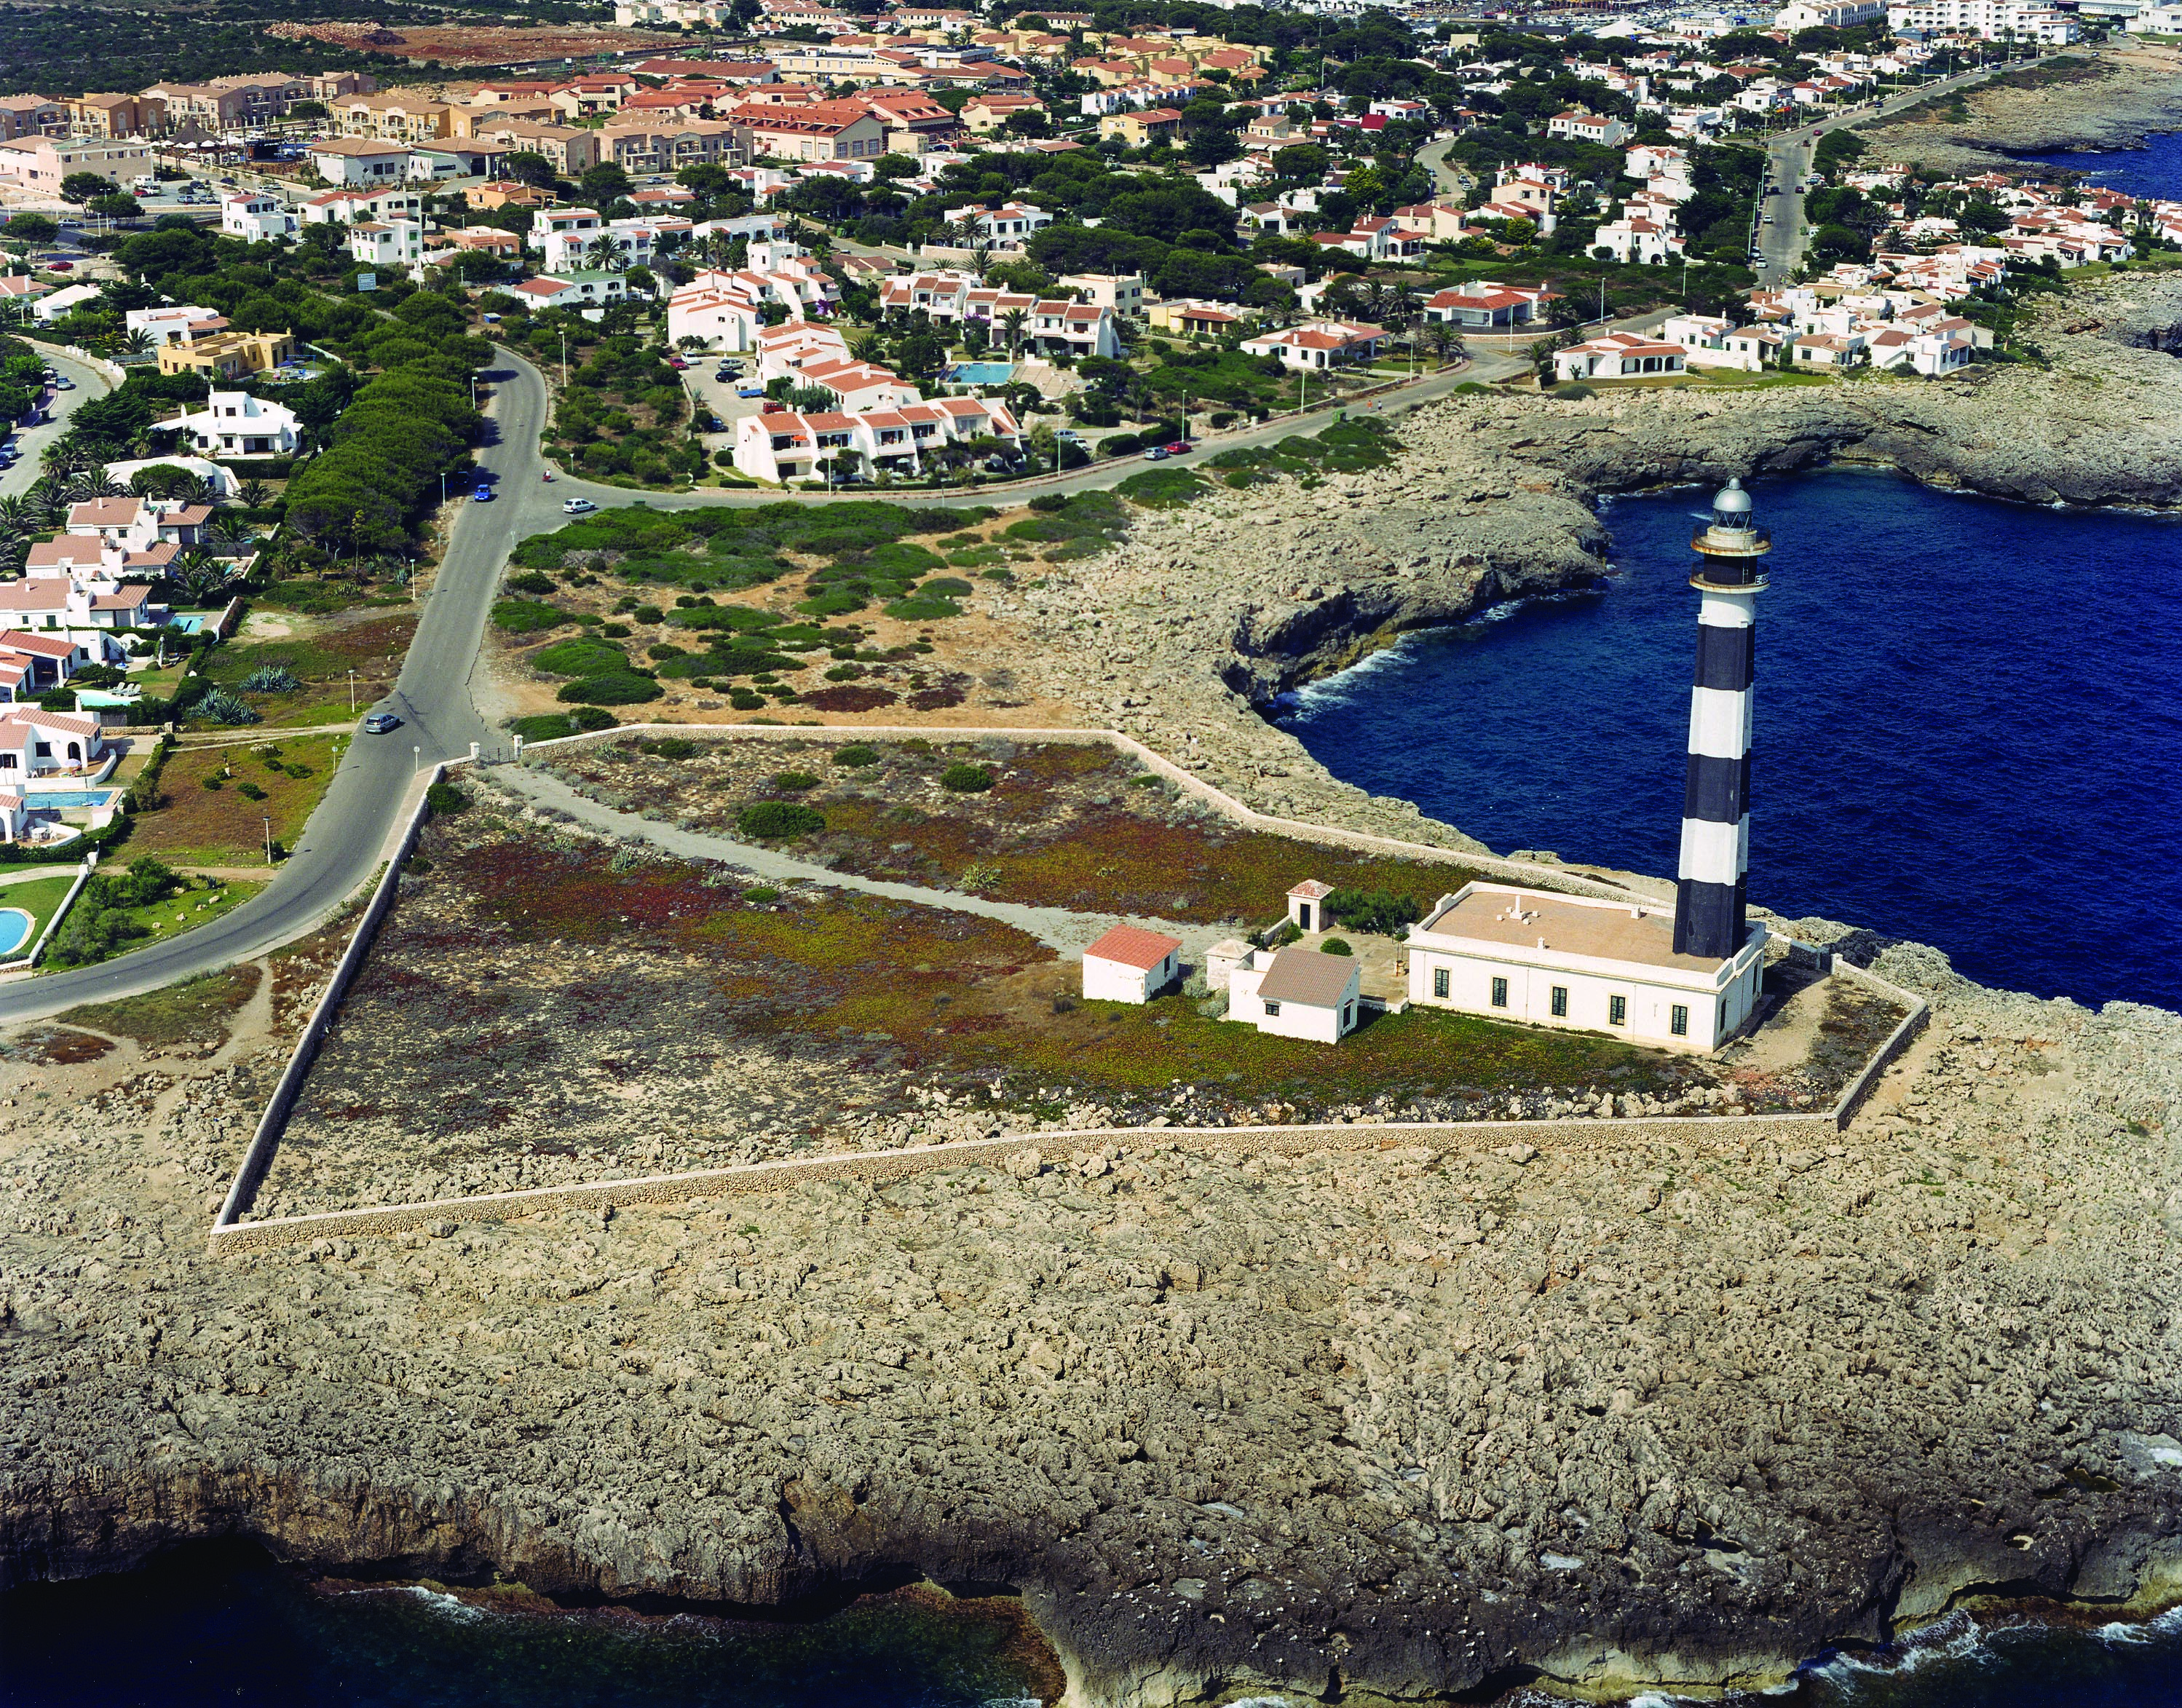 19 Menorca - Artrutx